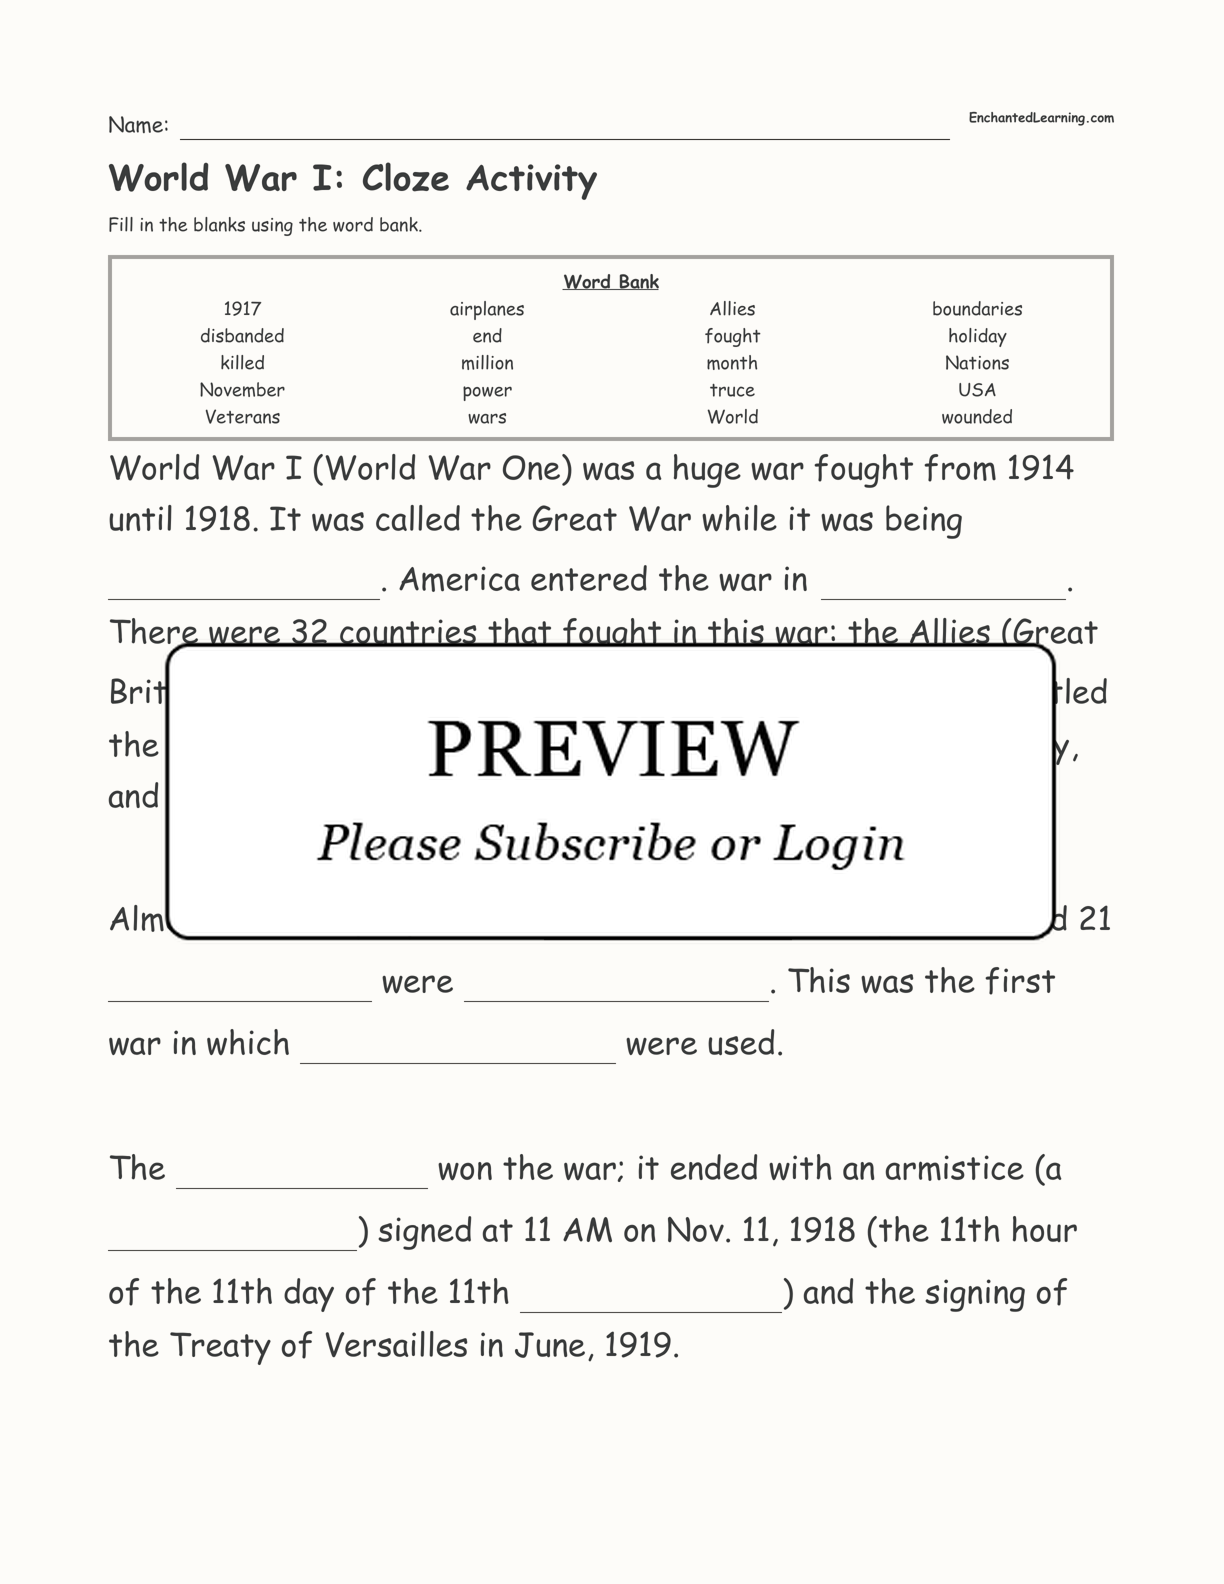 World War I: Cloze Activity interactive worksheet page 1